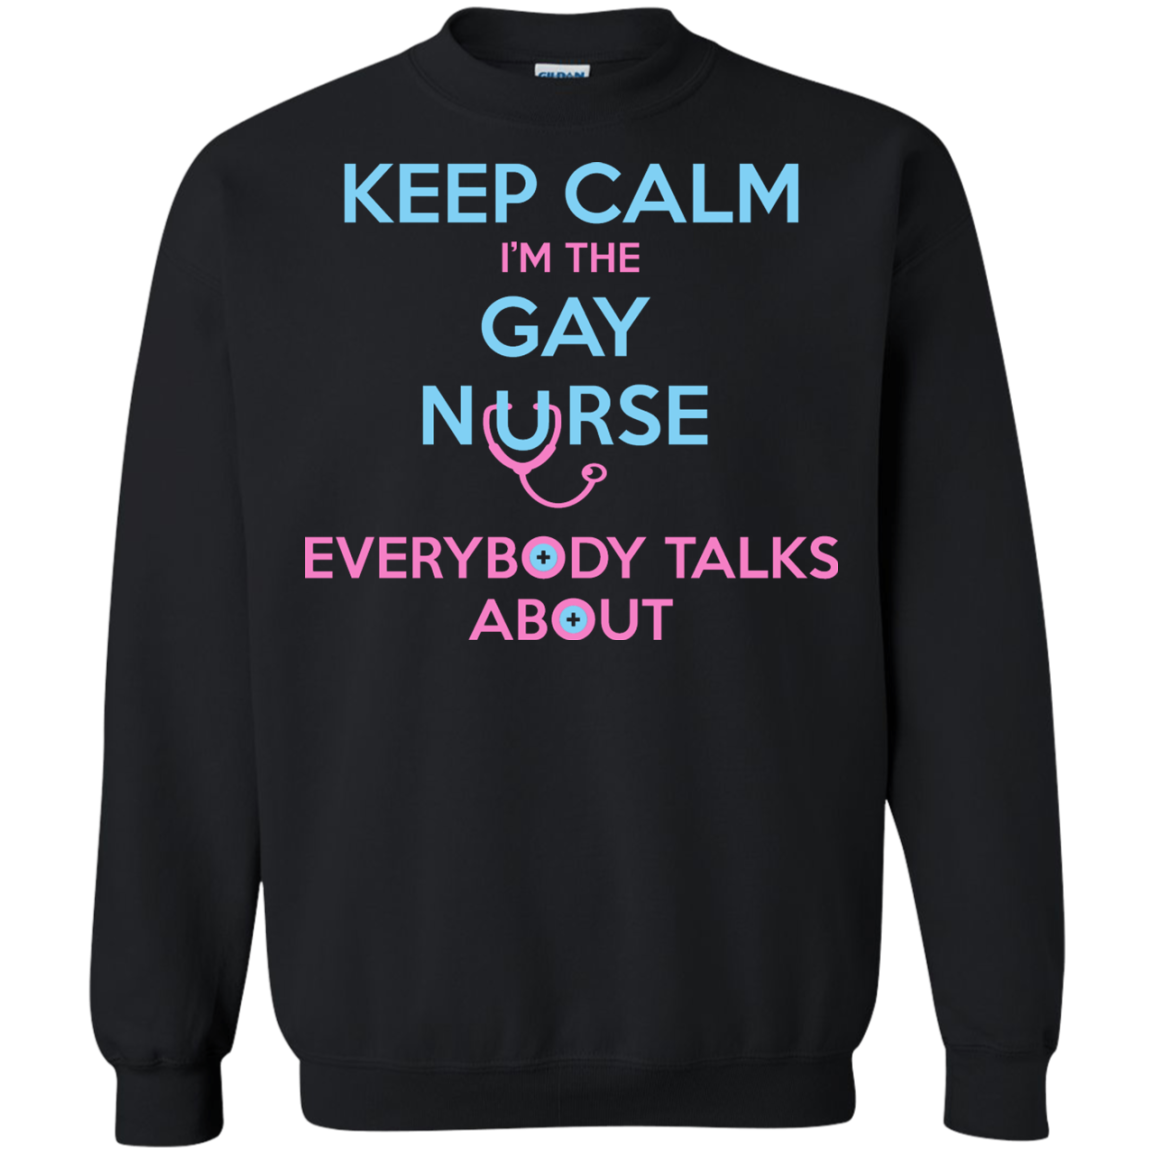 Keep Calm I'm The Gay Nurse black full sleeves sweatshirt for Men & women